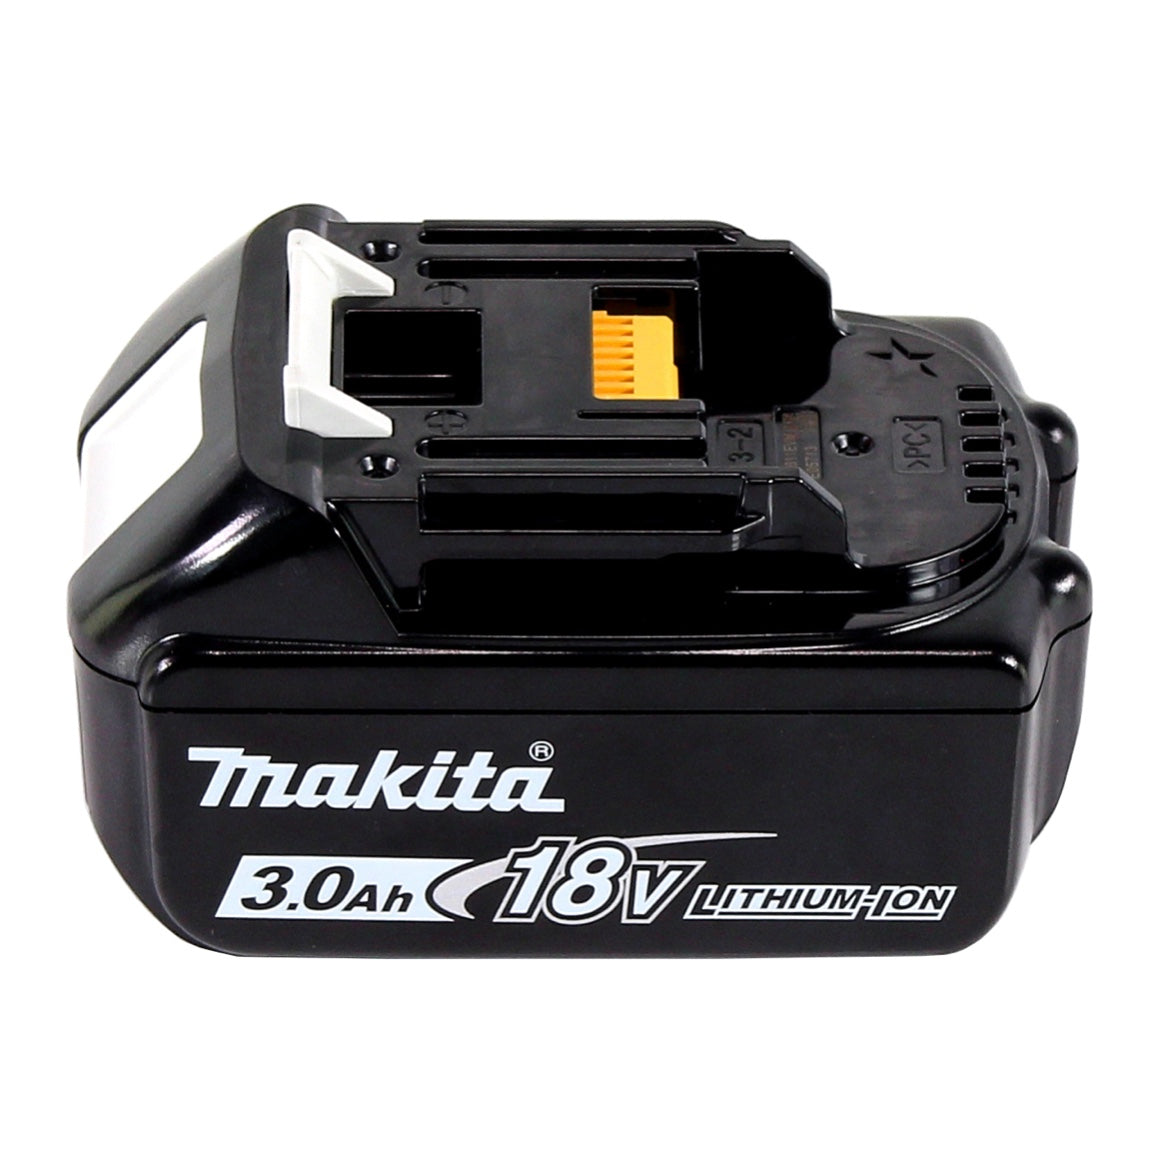 Makita DCL 184 F1 Akku Staubsauger 18 V 54 mbar 0,5 l + 1x Akku 3,0 Ah - ohne Ladegerät - Toolbrothers